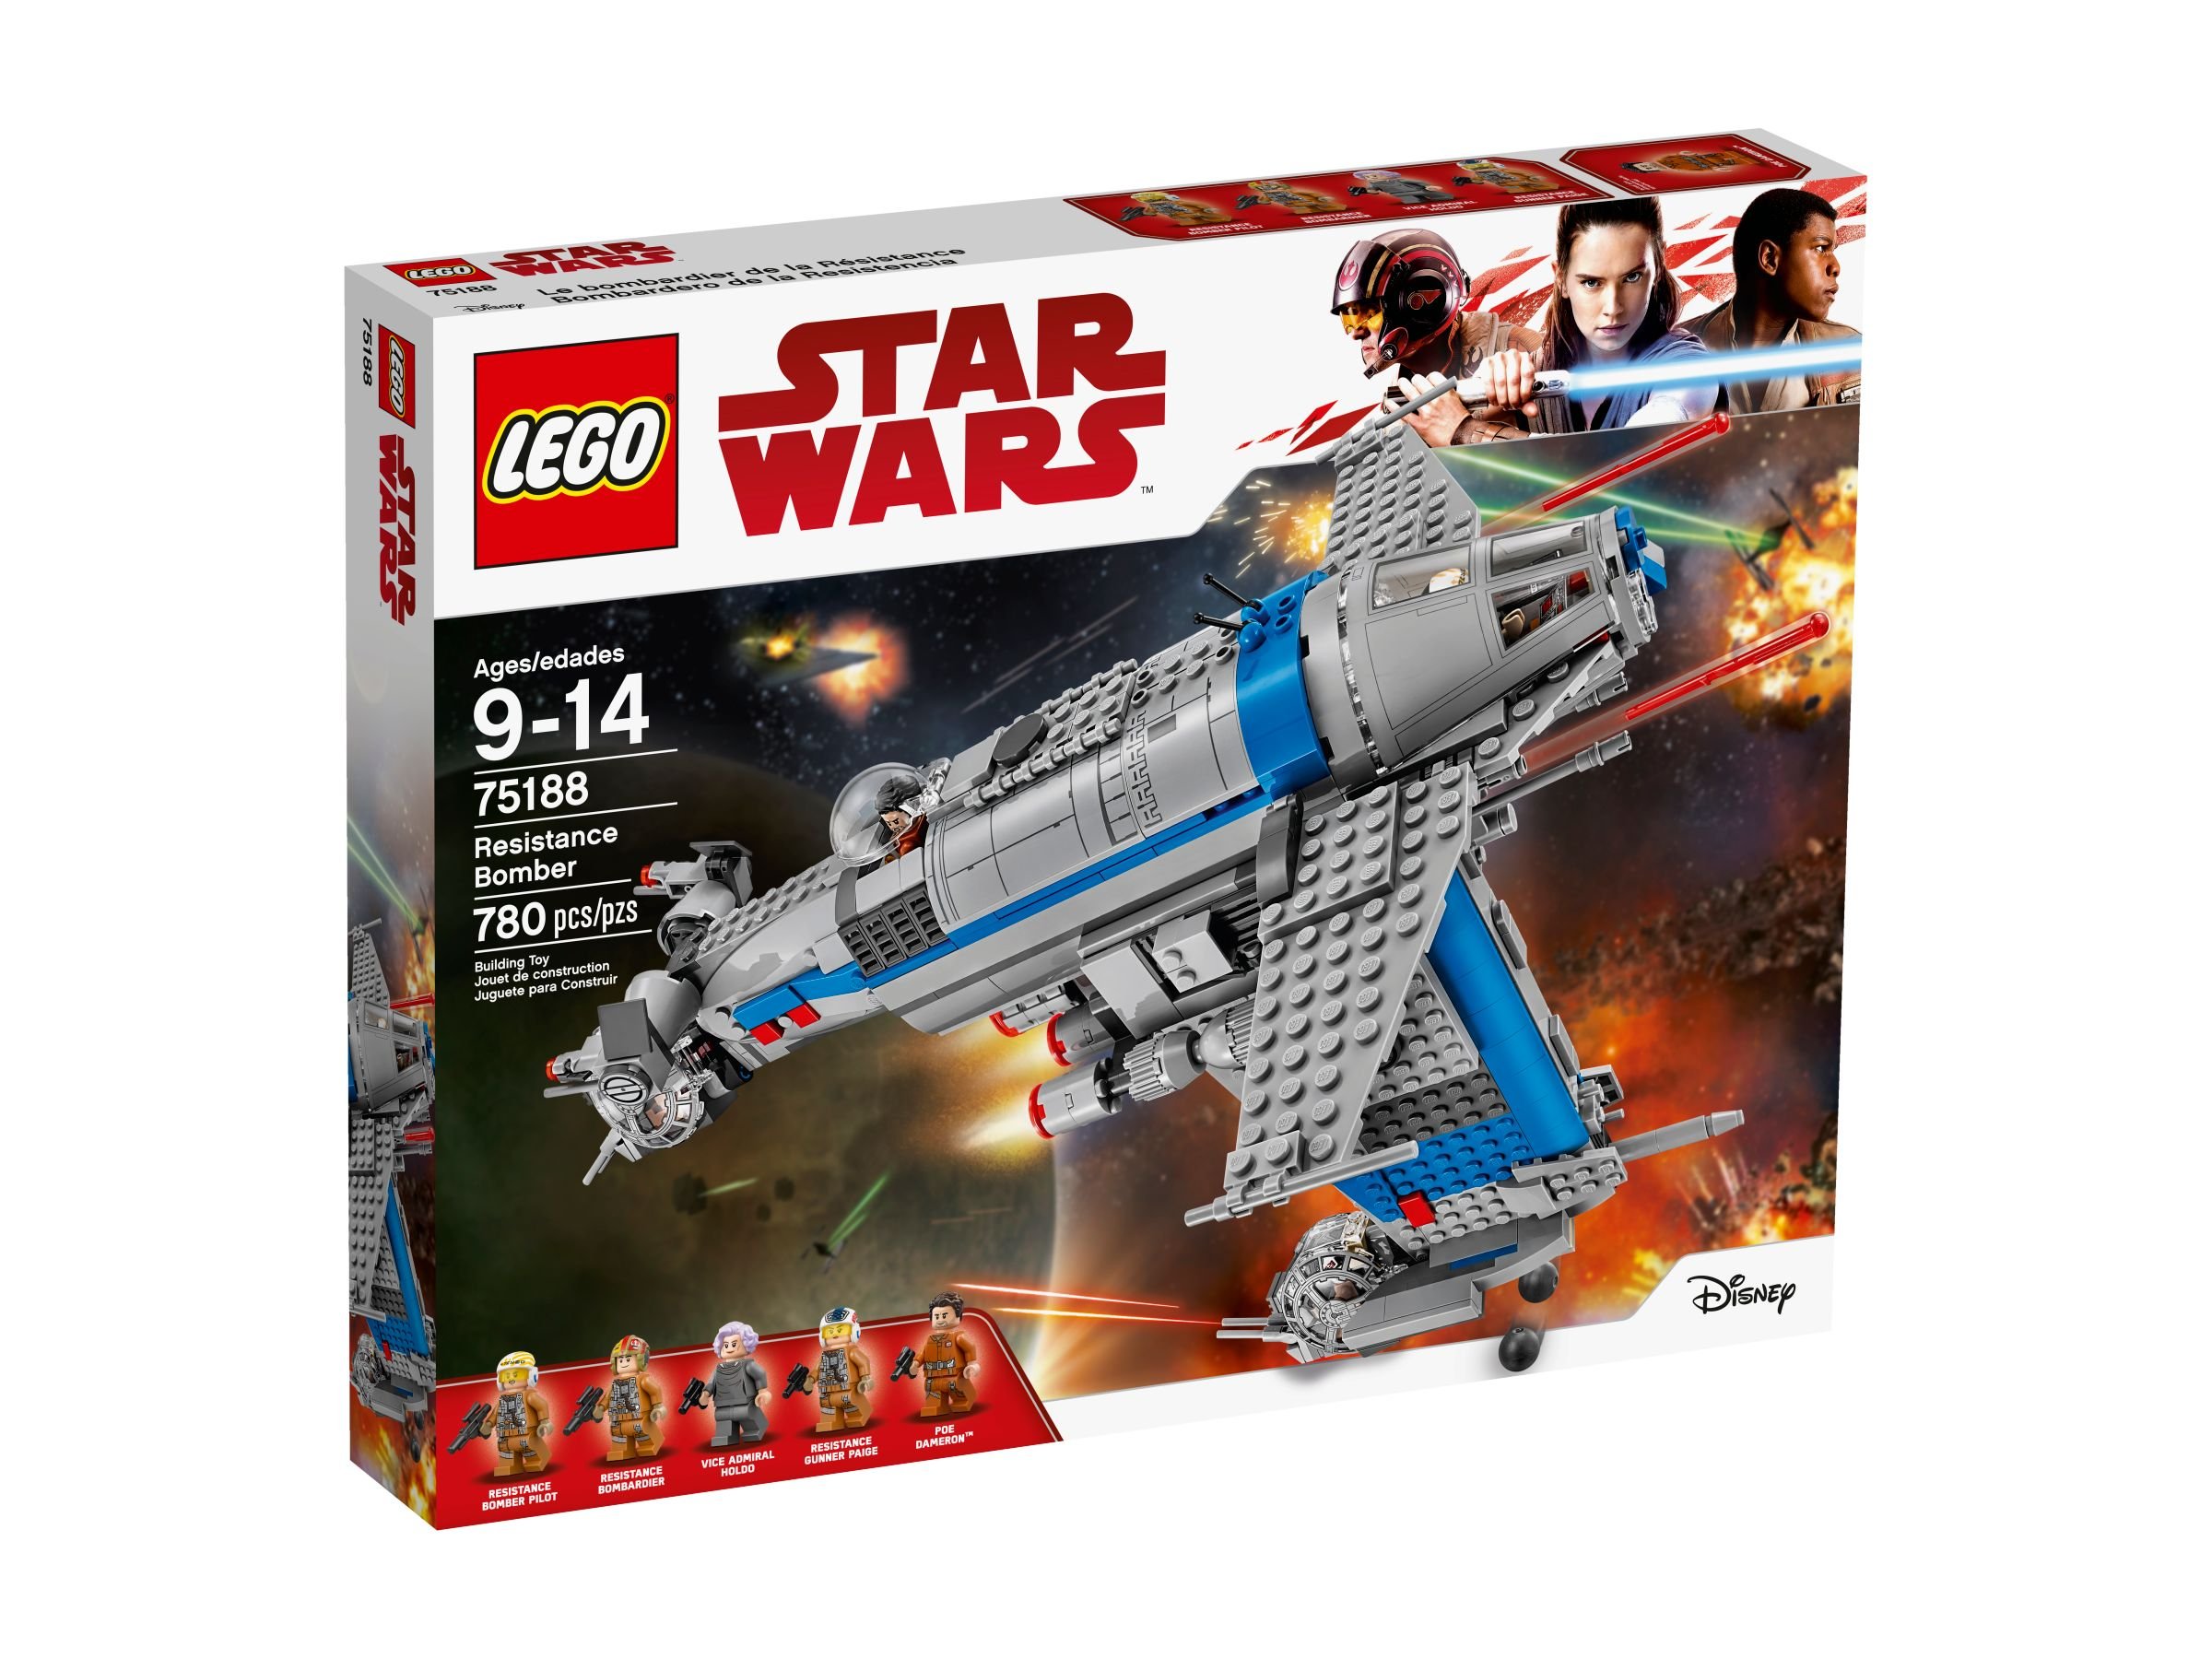 LEGO Star Wars 75188 Resistance Bomber LEGO_75188_alt1.jpg